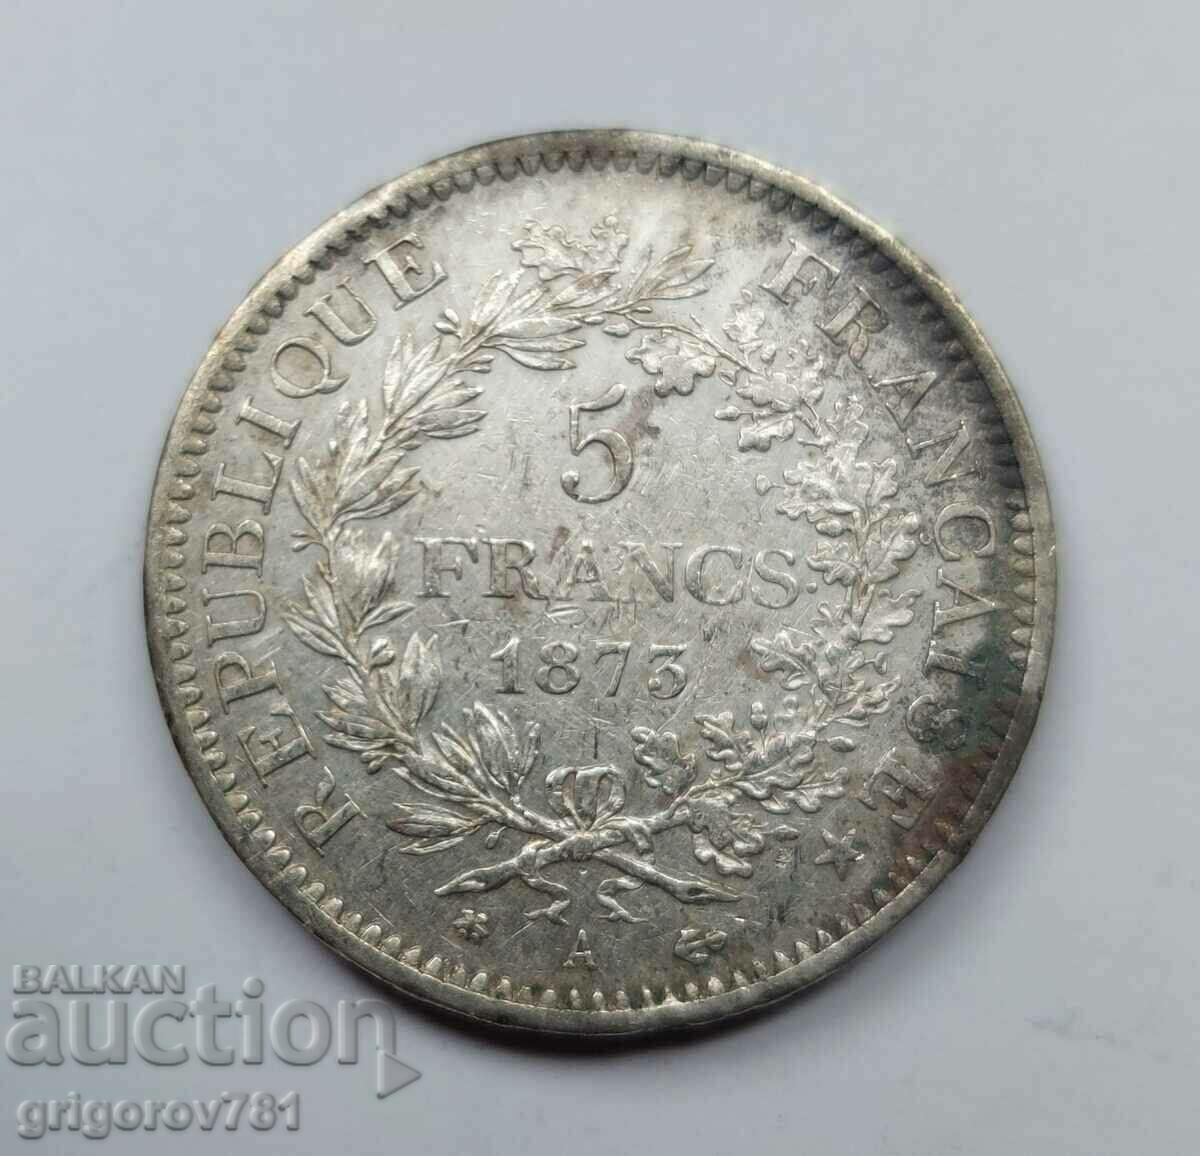 5 Francs Silver France 1873 A - Silver Coin #53